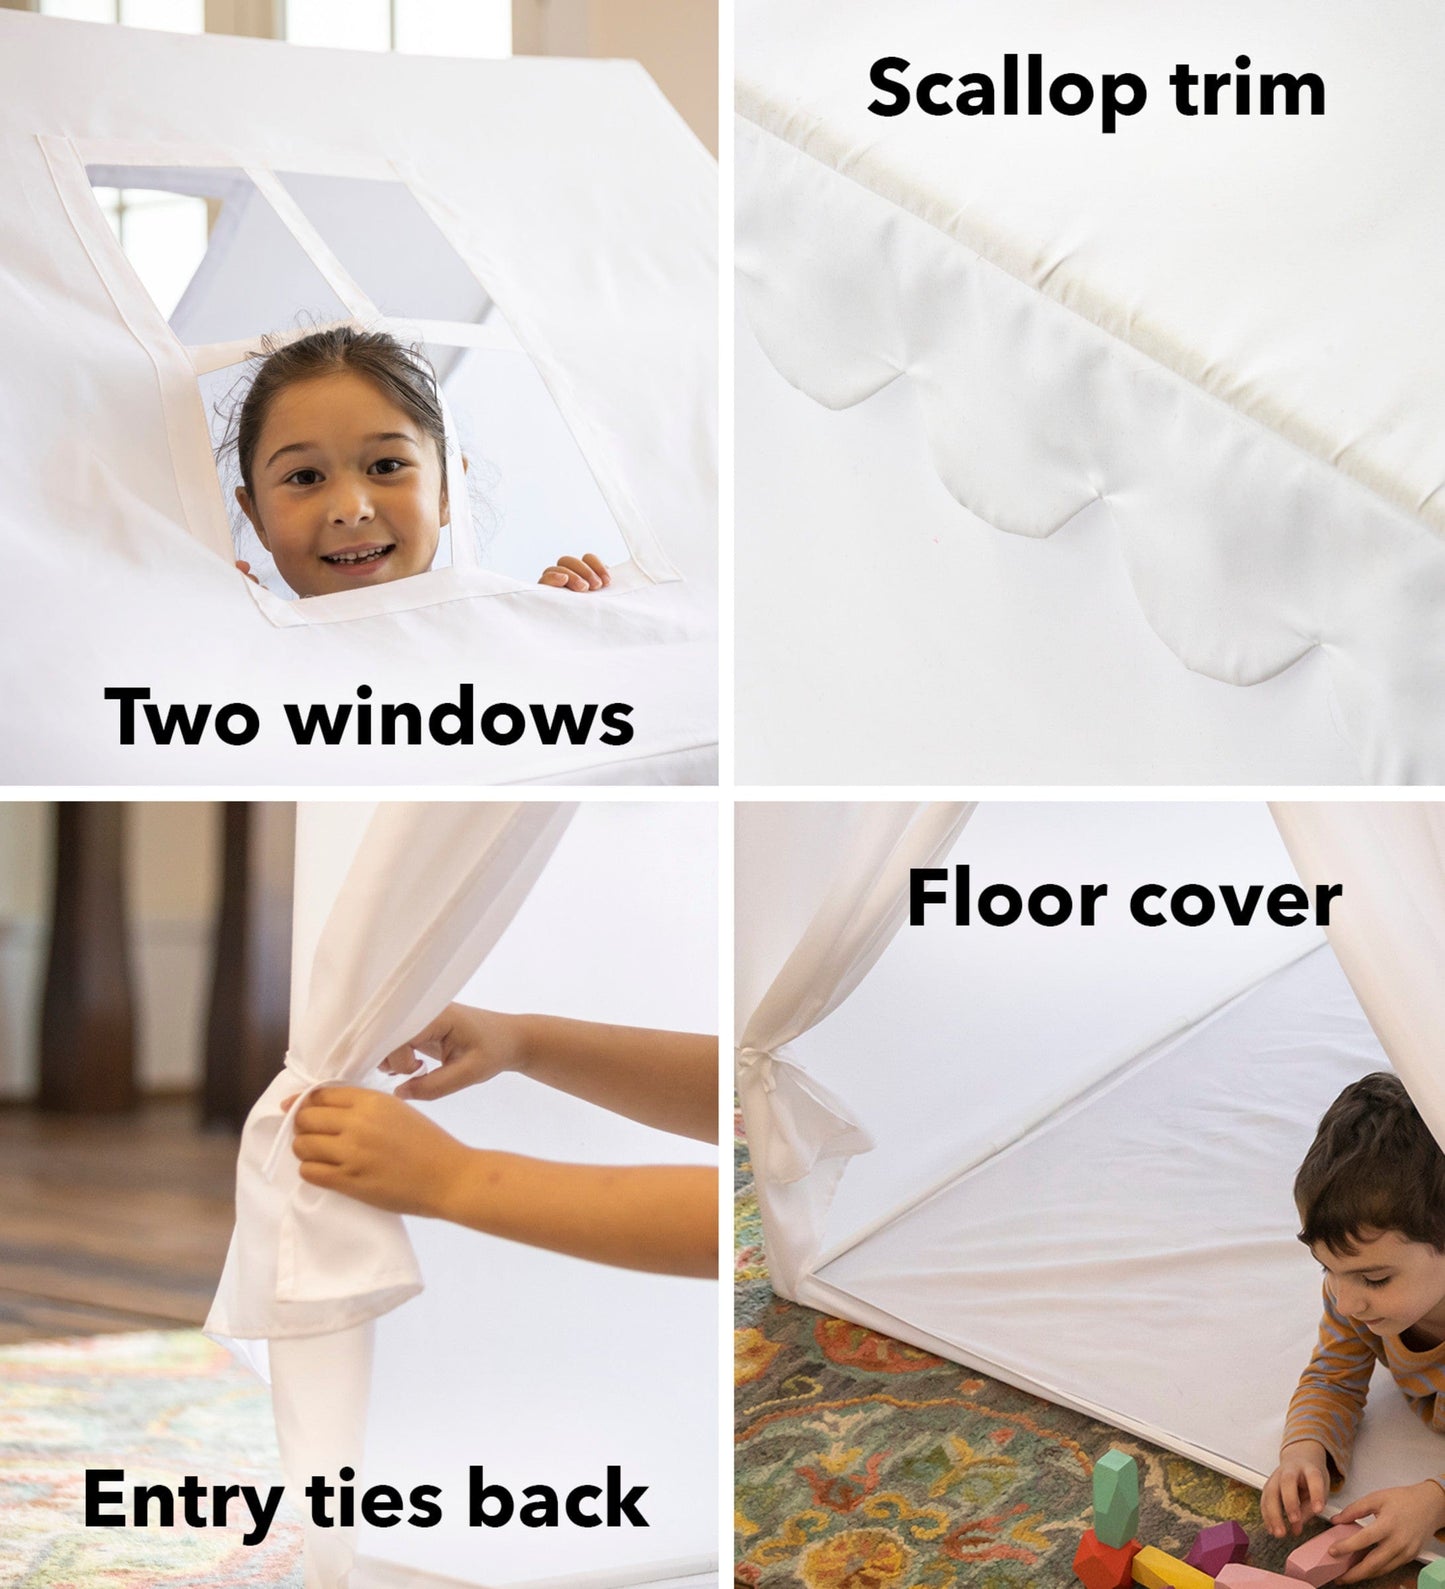 4-Foot Indoor Playhouse Tent with Floor Cover